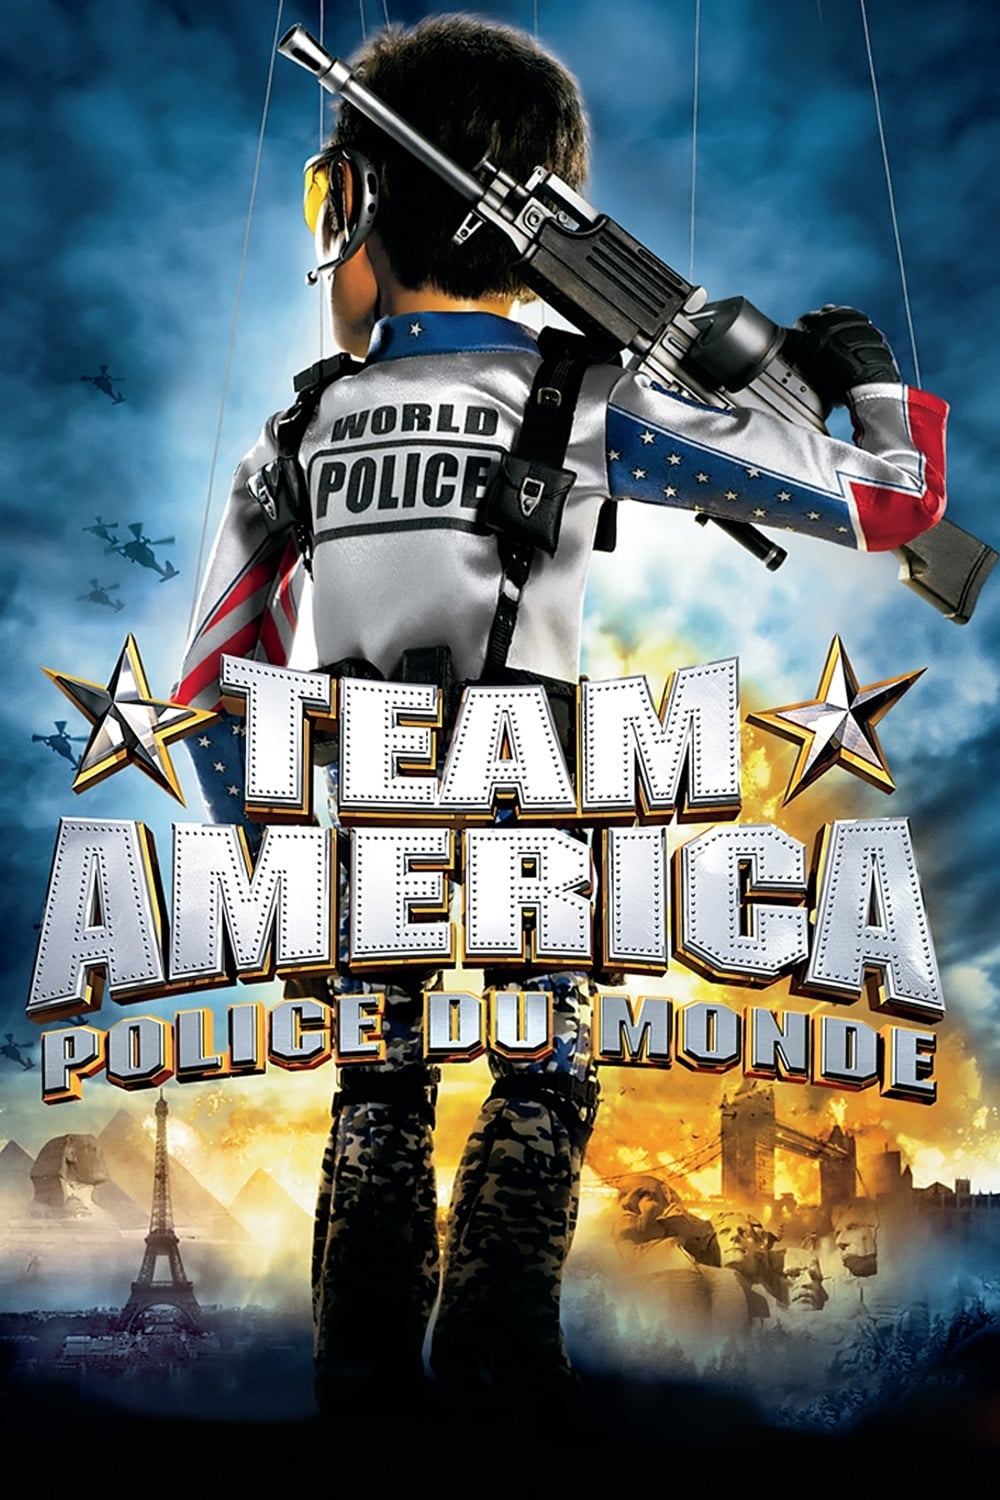 Affiche du film Team America : Police du monde poster